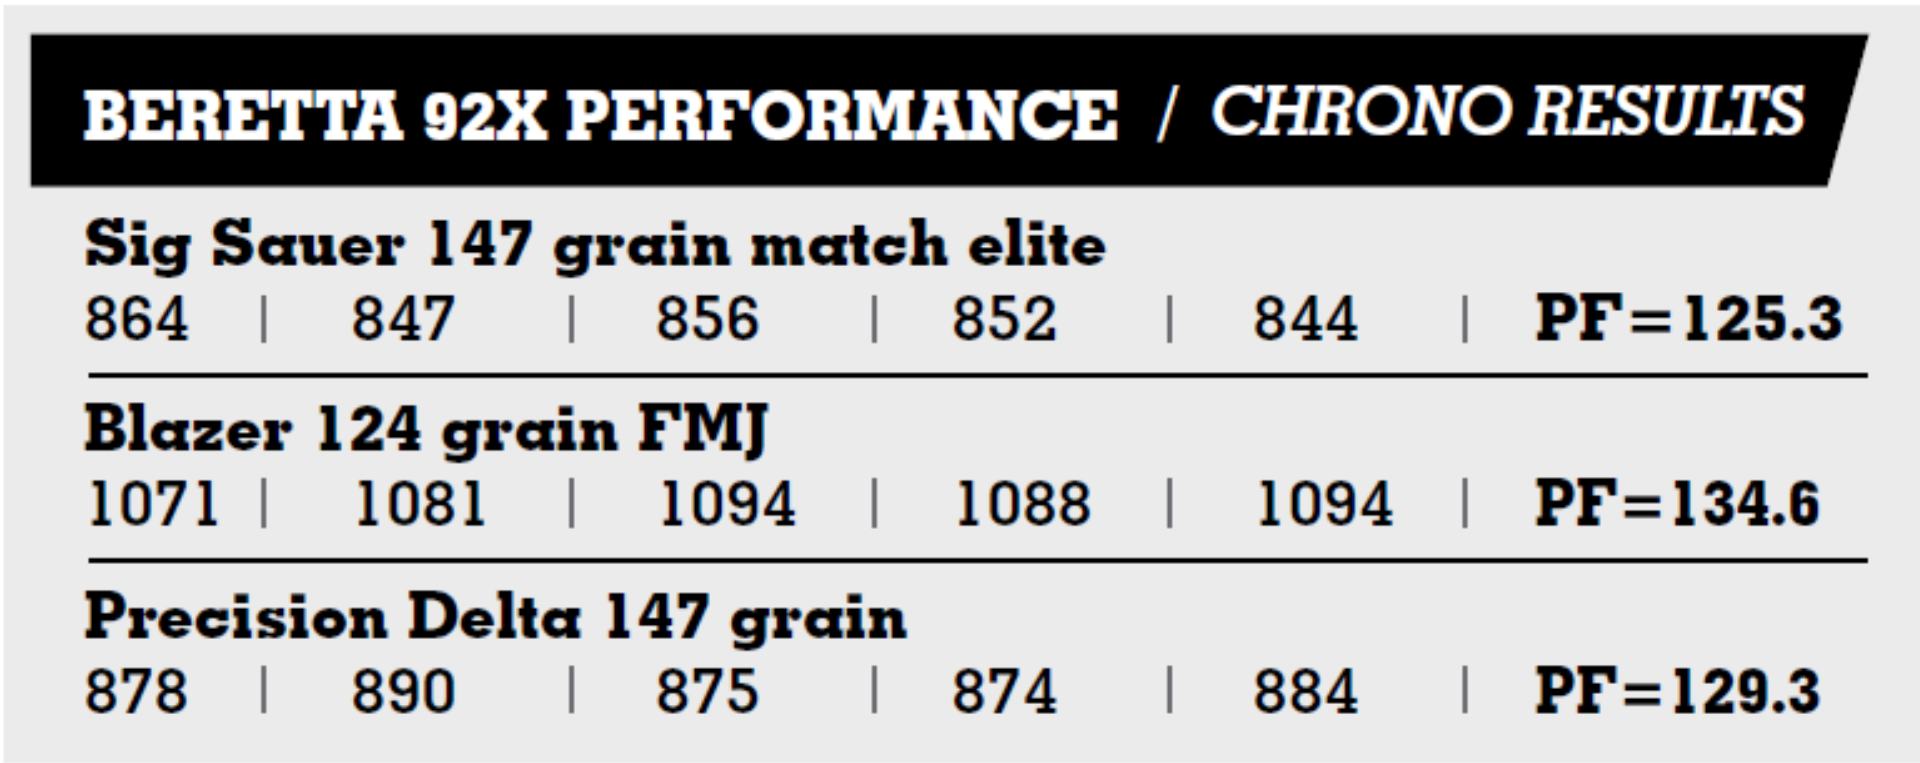 Beretta 92X Performance chrono results